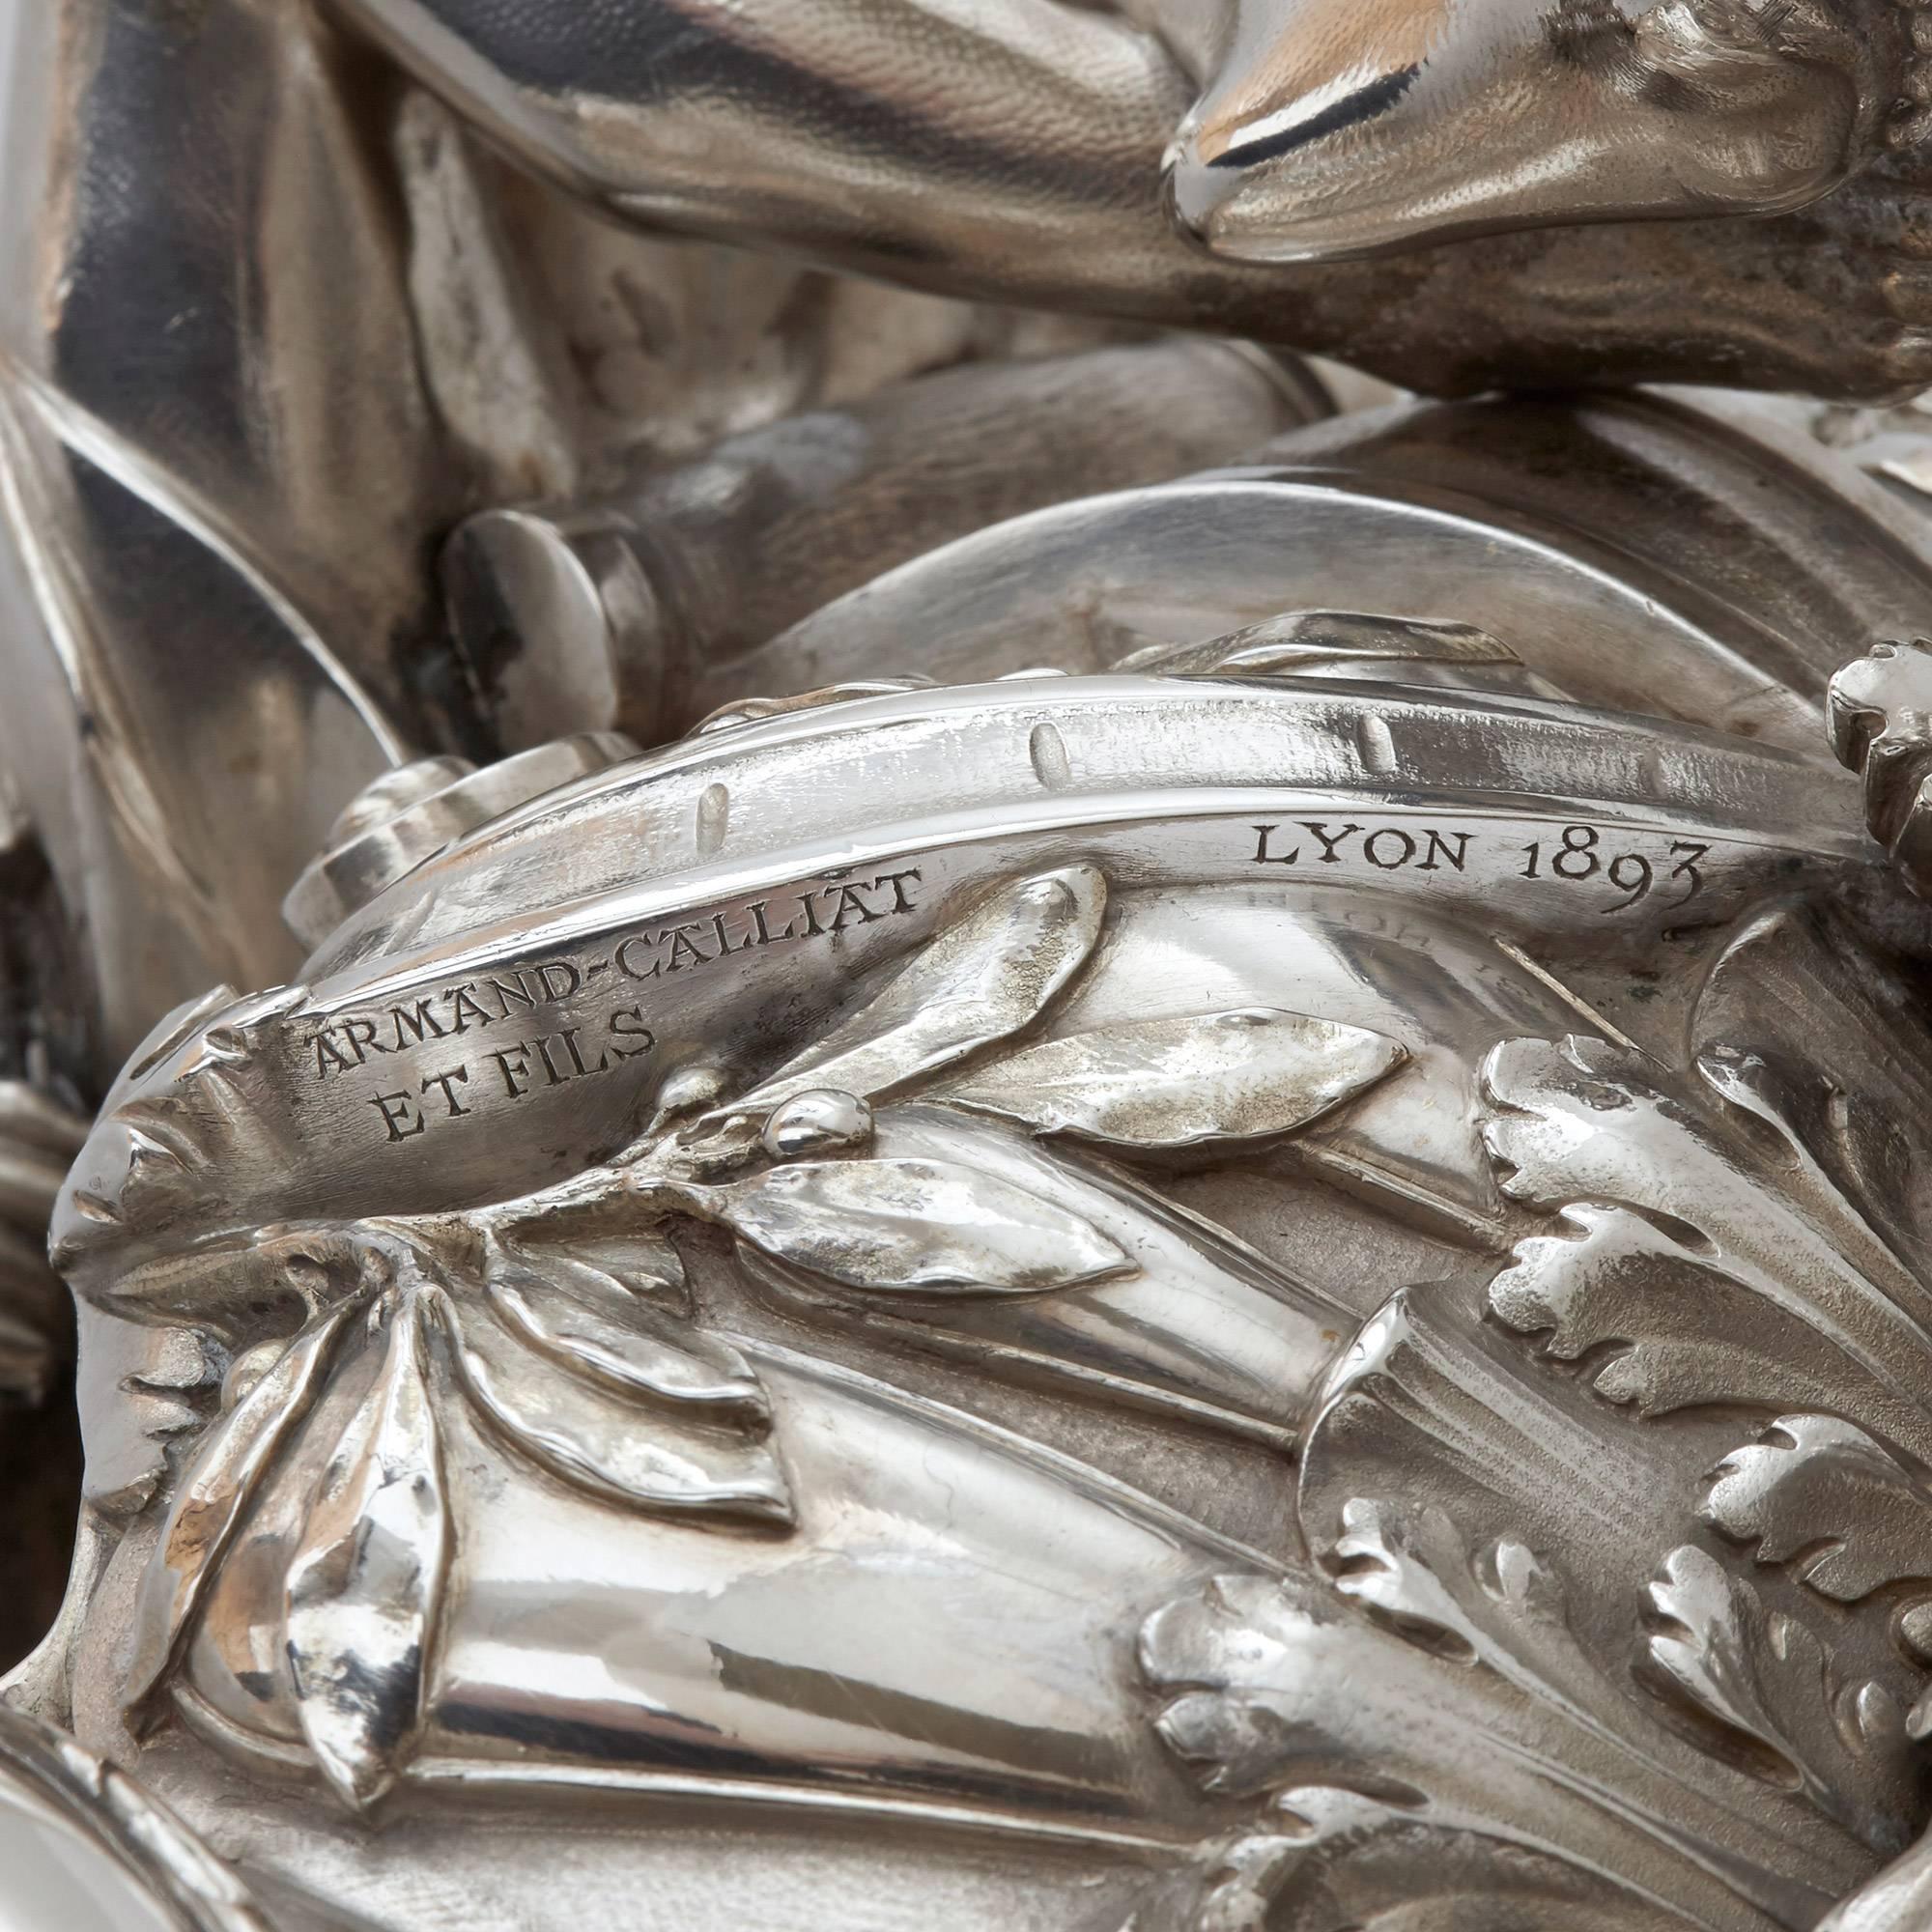 Solid Silver Centrepiece by Armand-Calliat et Fils 1